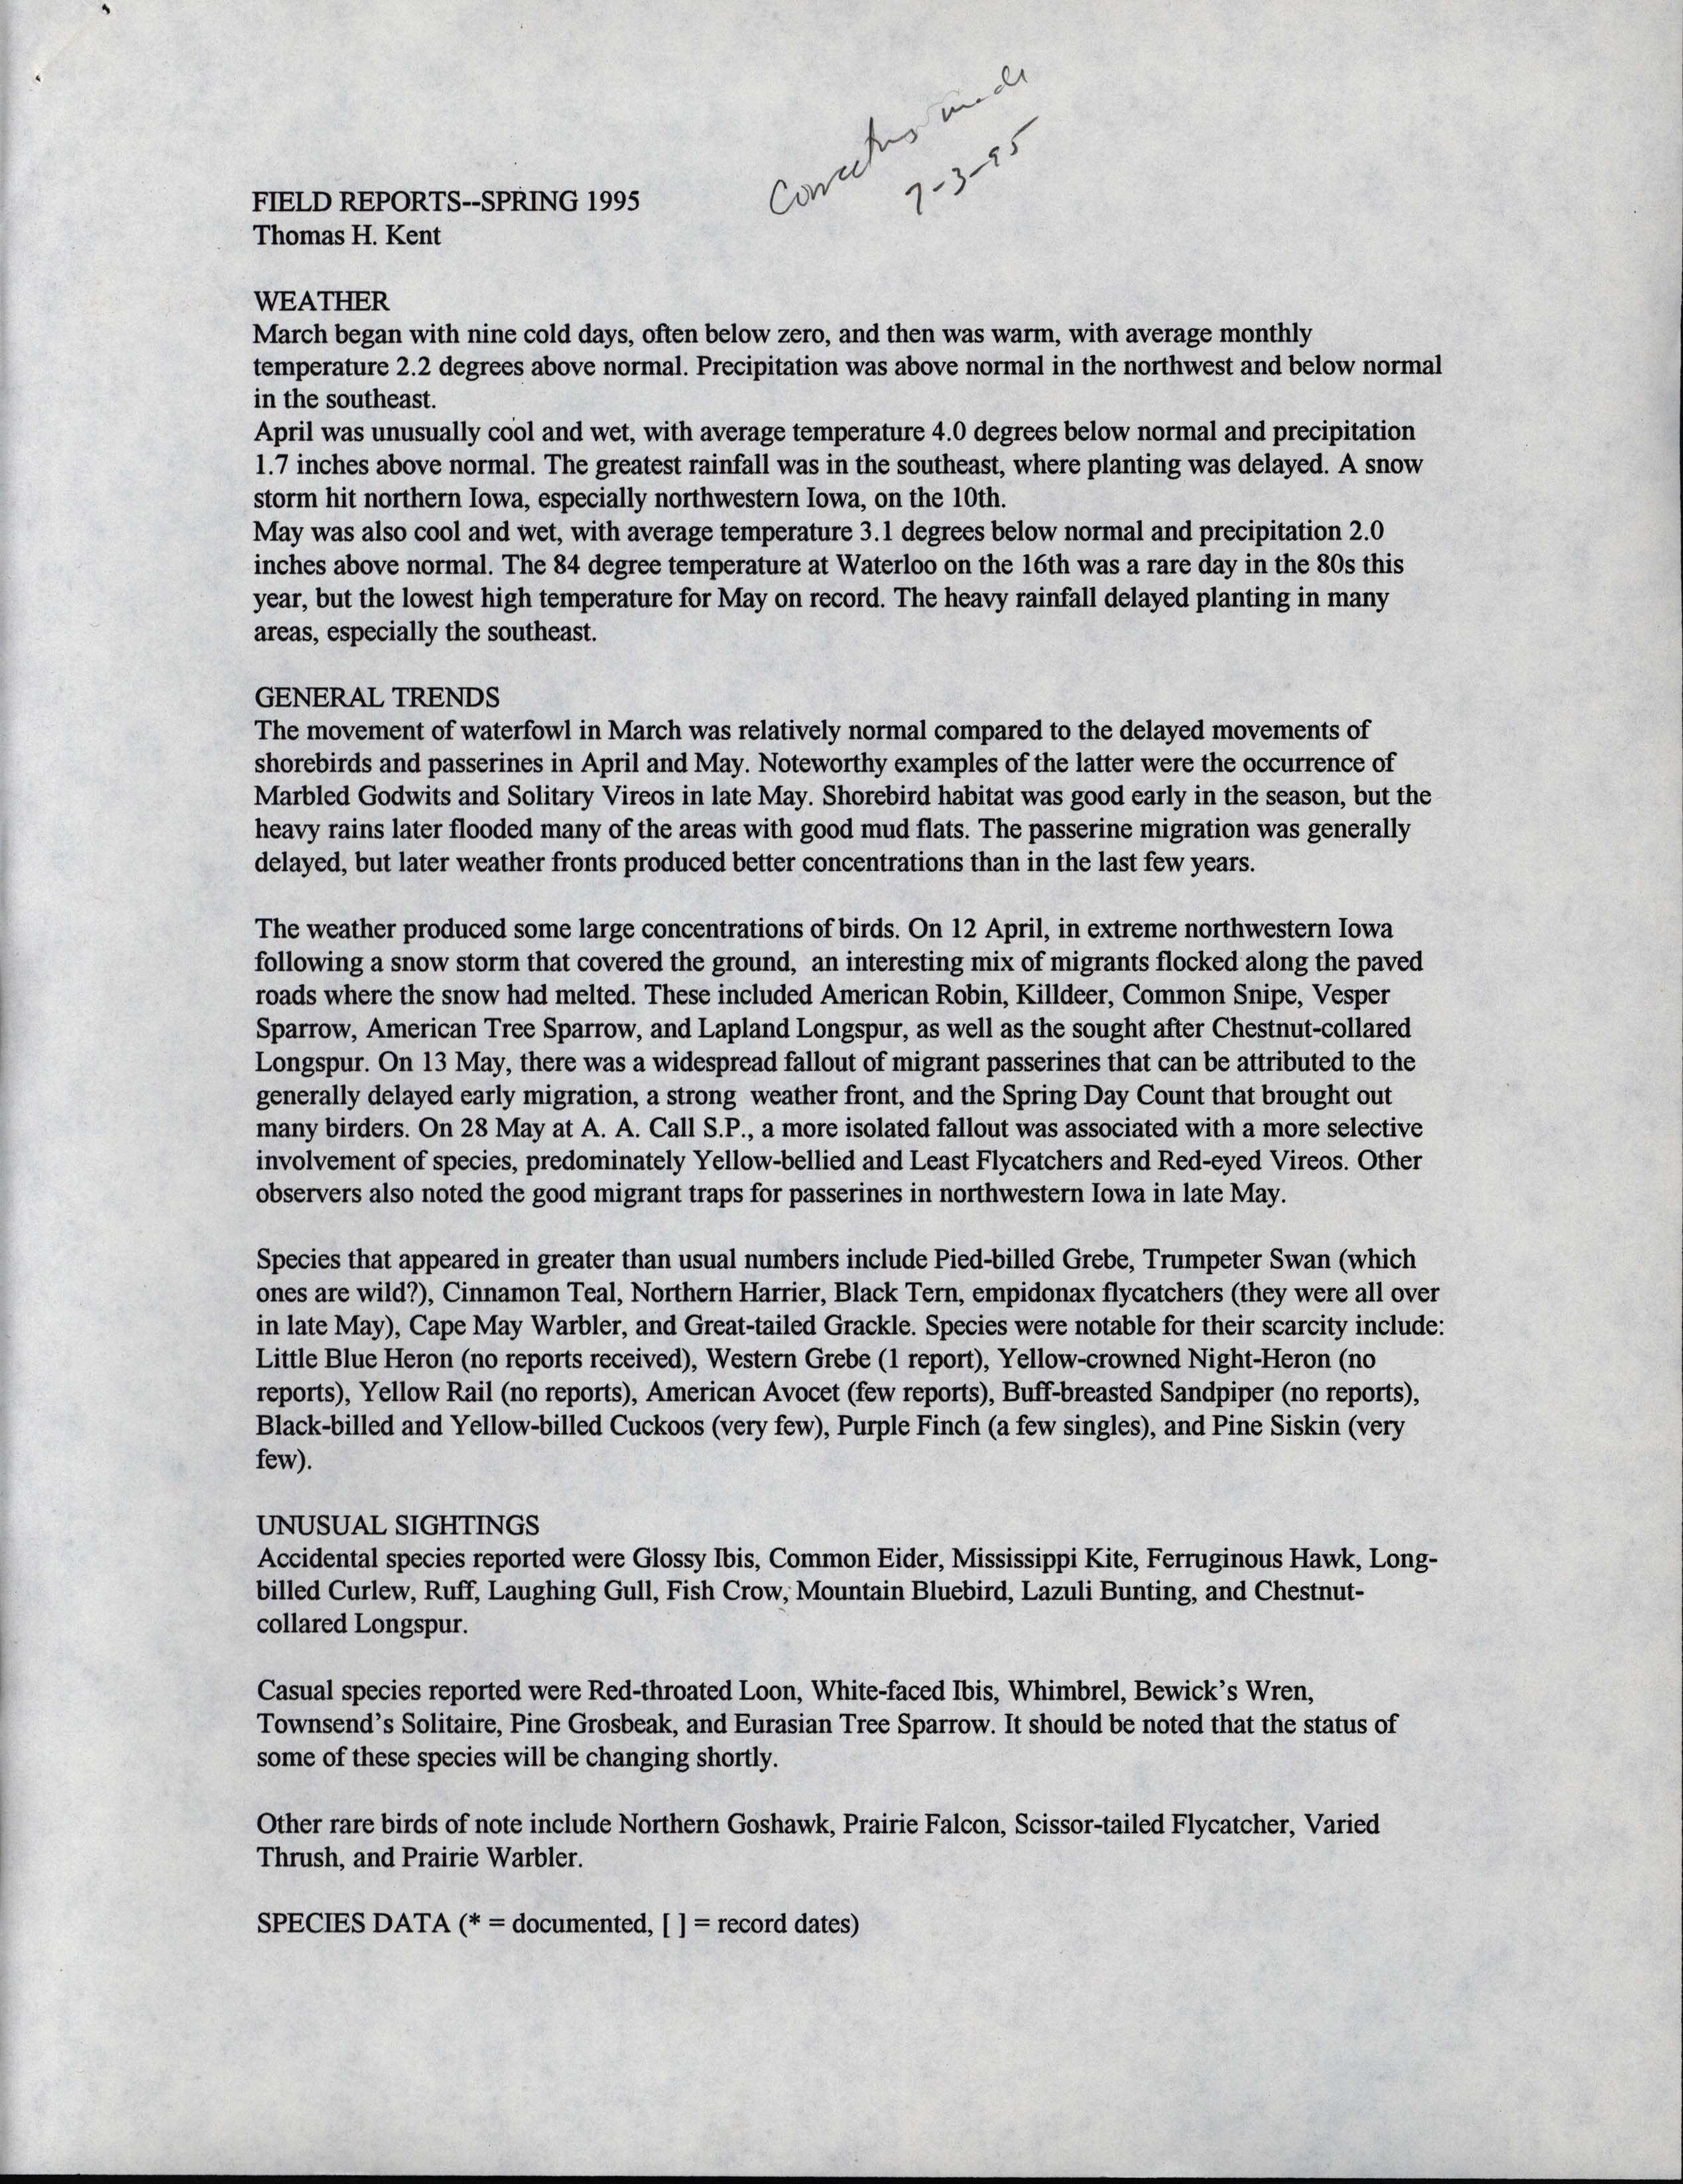 Iowa Ornithologists' Union, Quarterly field report, spring 1995